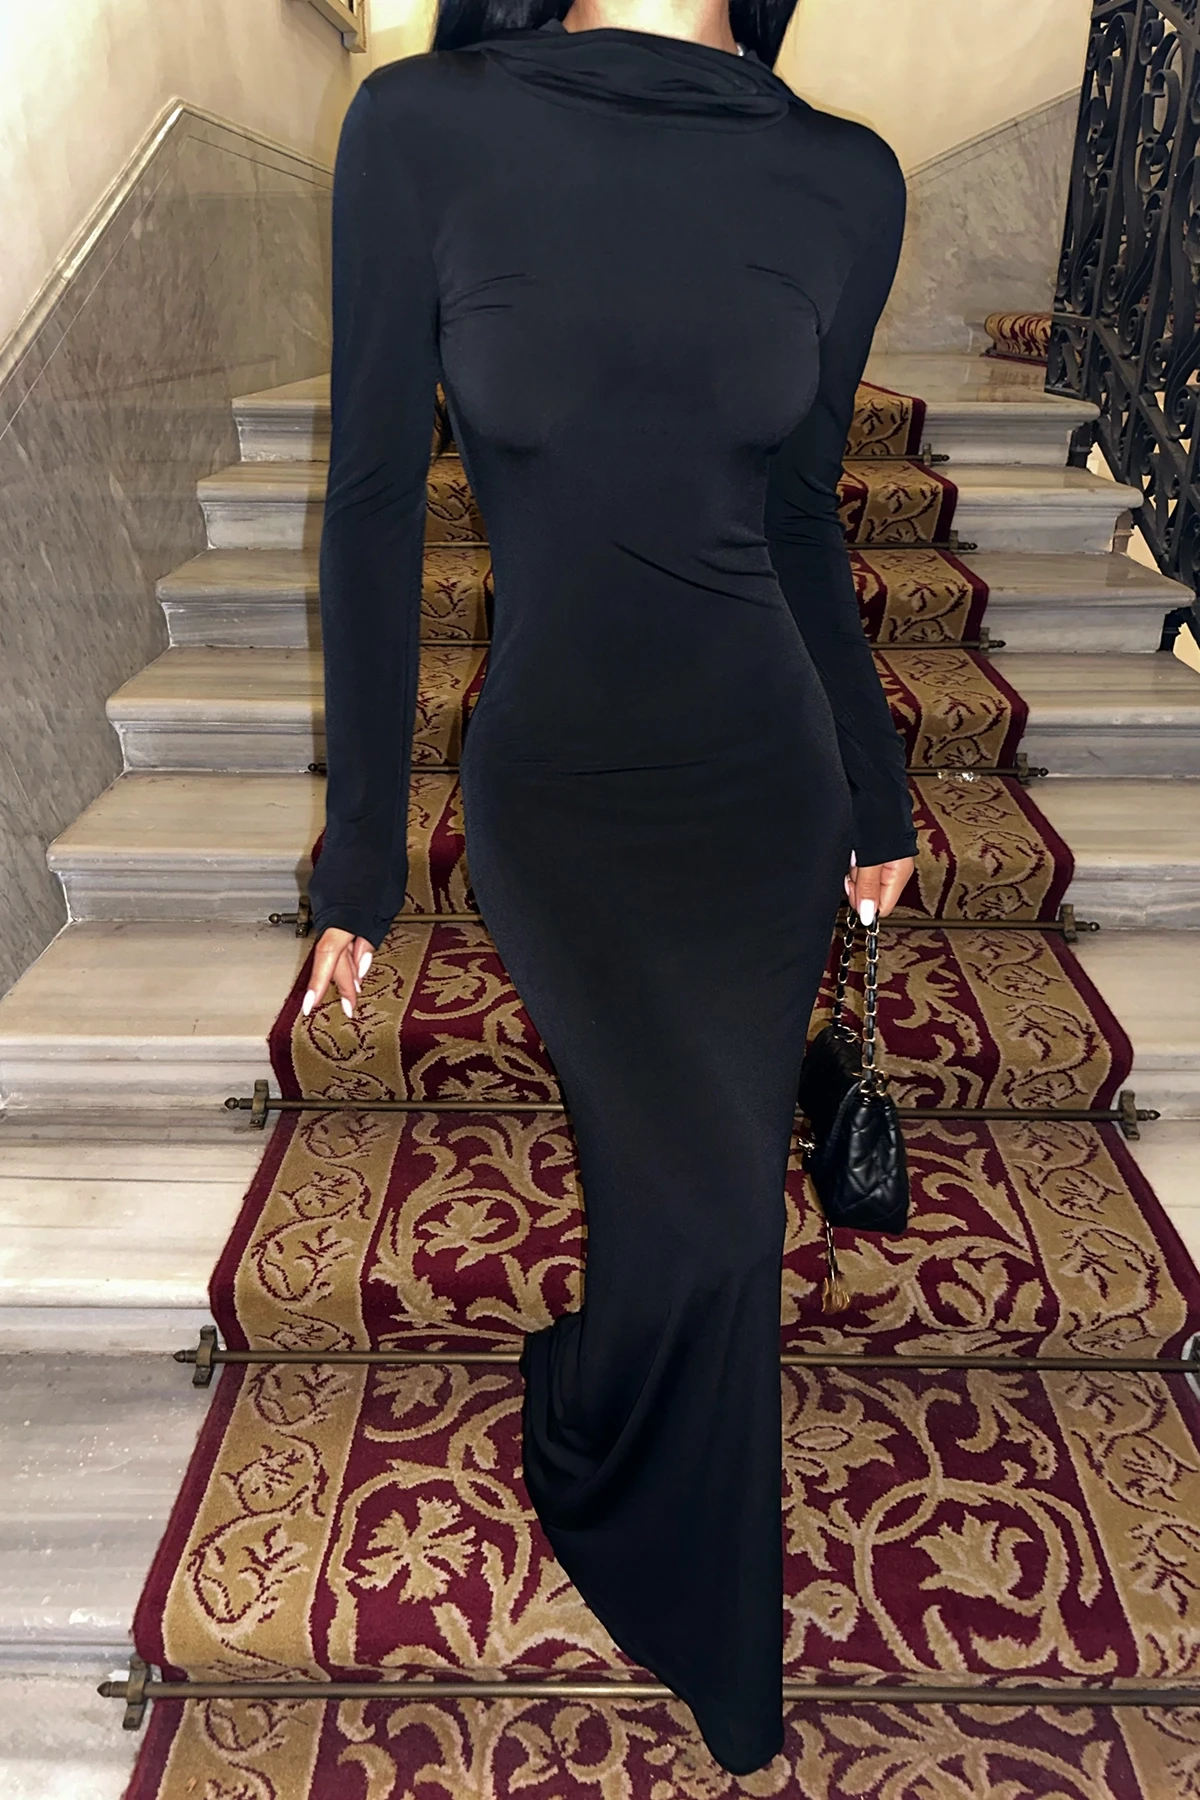 Black Basic Long Dress